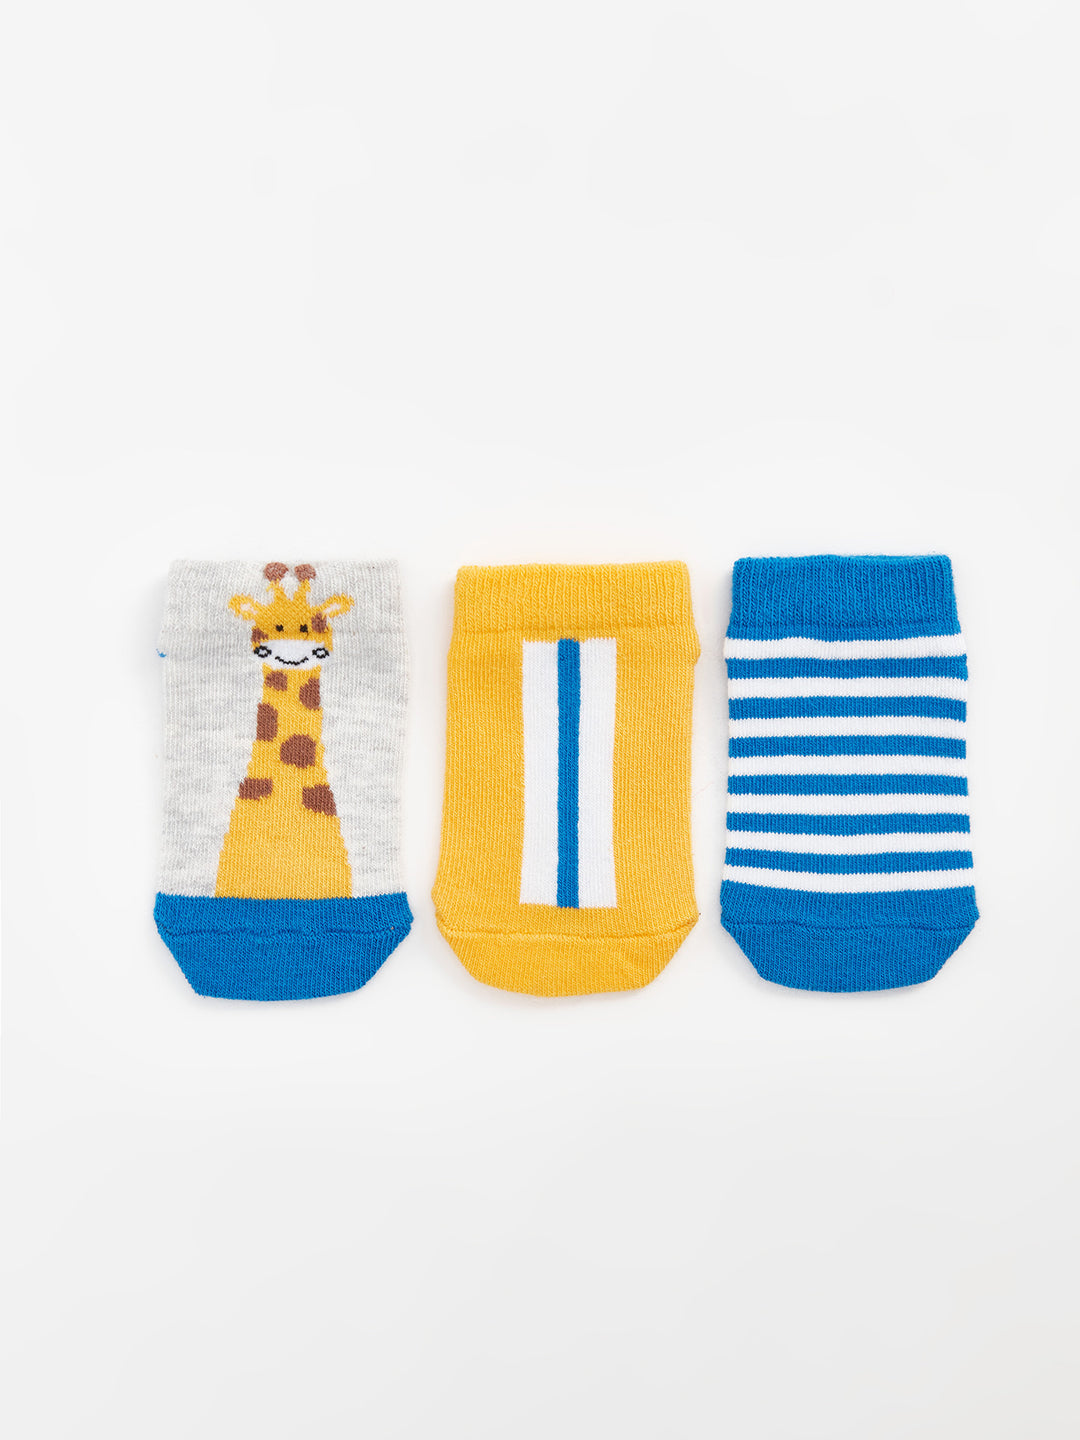 Printed Baby Boy Booties Socks 3-Piece